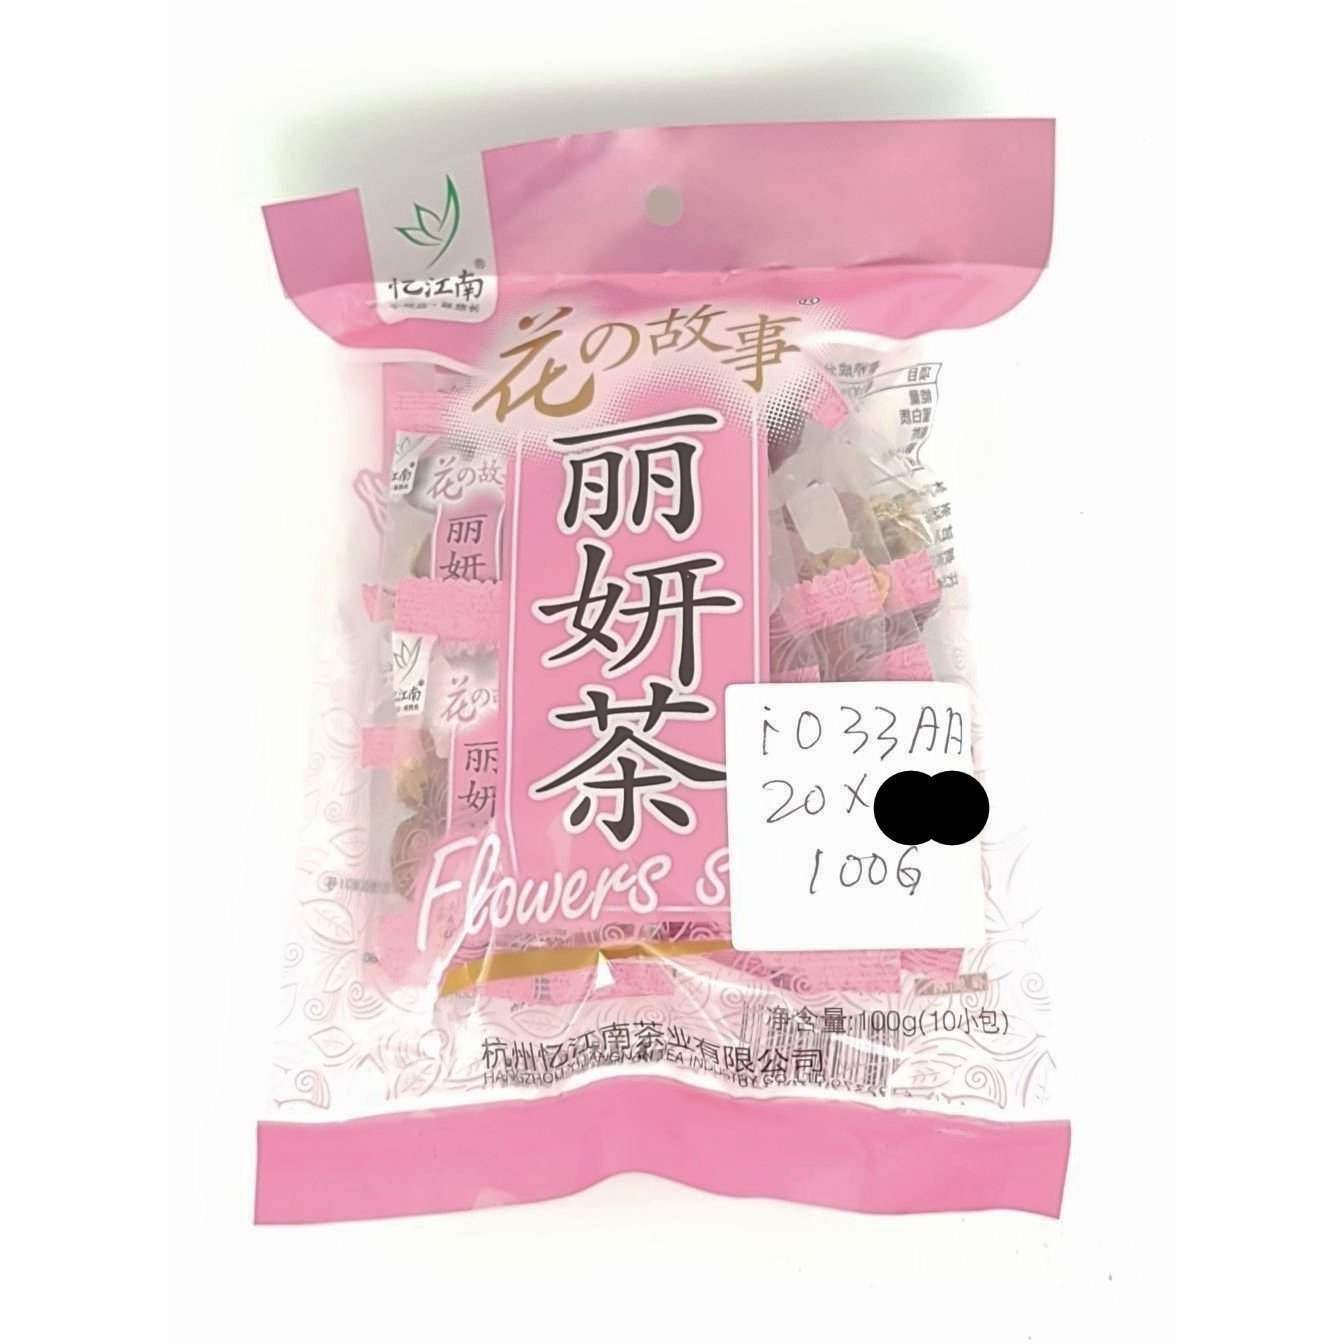 I033AA Ming Ji Brand - Tea 100g - 20 bags/CTN - New Eastland Pty Ltd - Asian food wholesalers